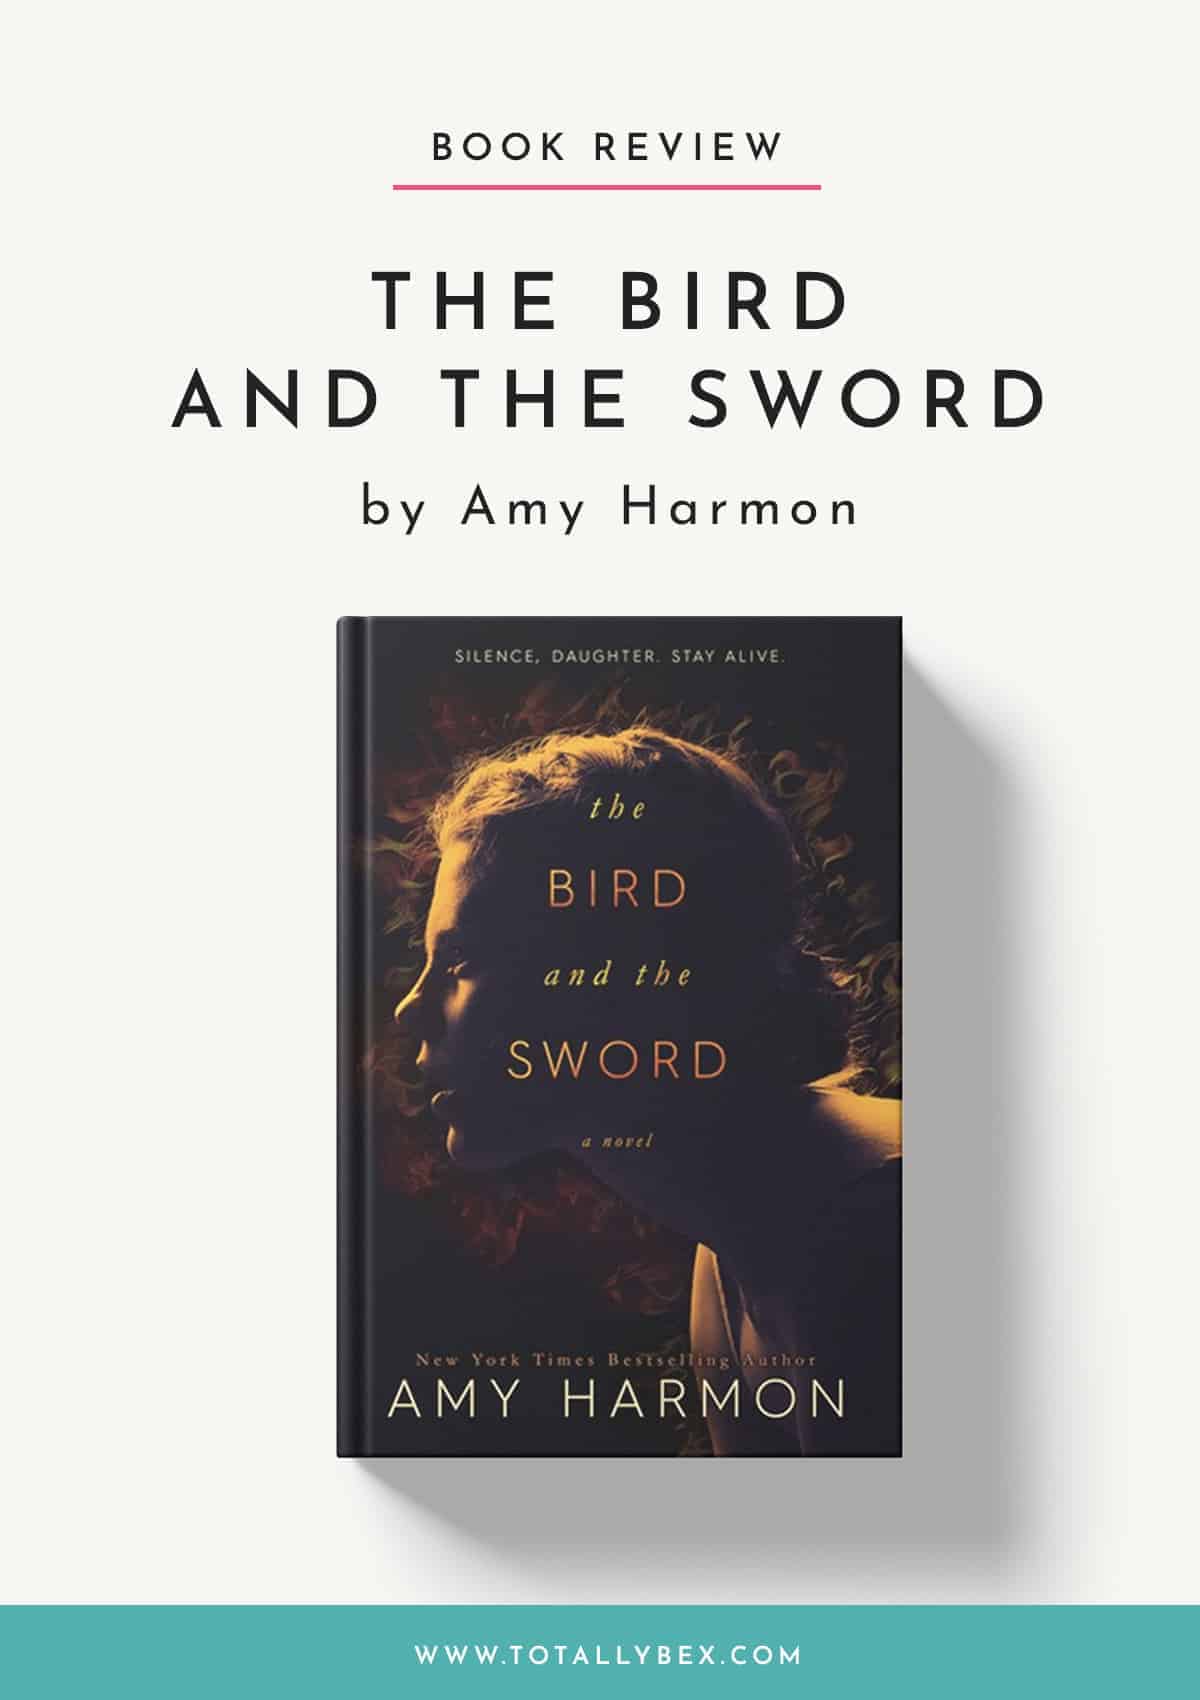 The Bird and the Sword by Amy Harmon – Enchanting Fantasy Romance!